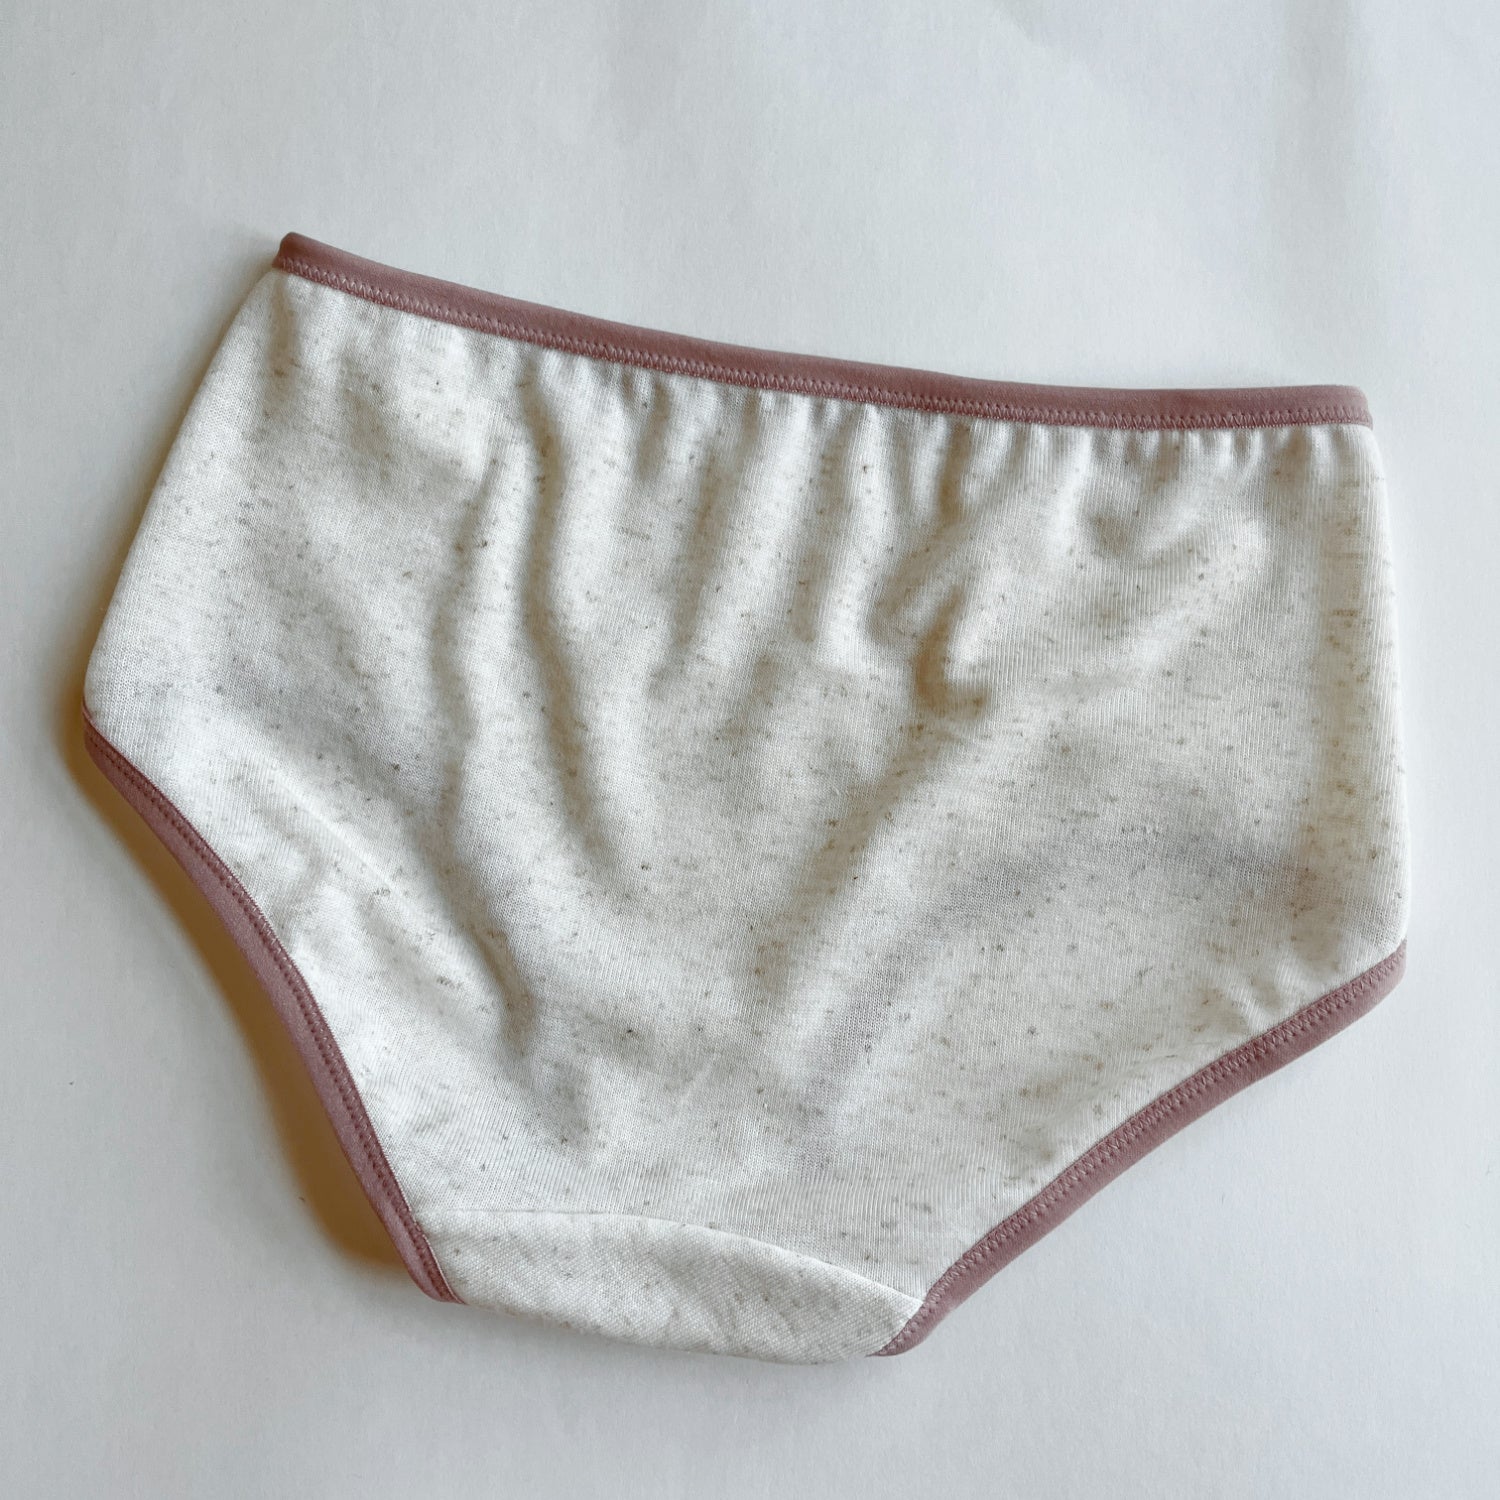 Women's linen underwear brief - butterscotch yellow